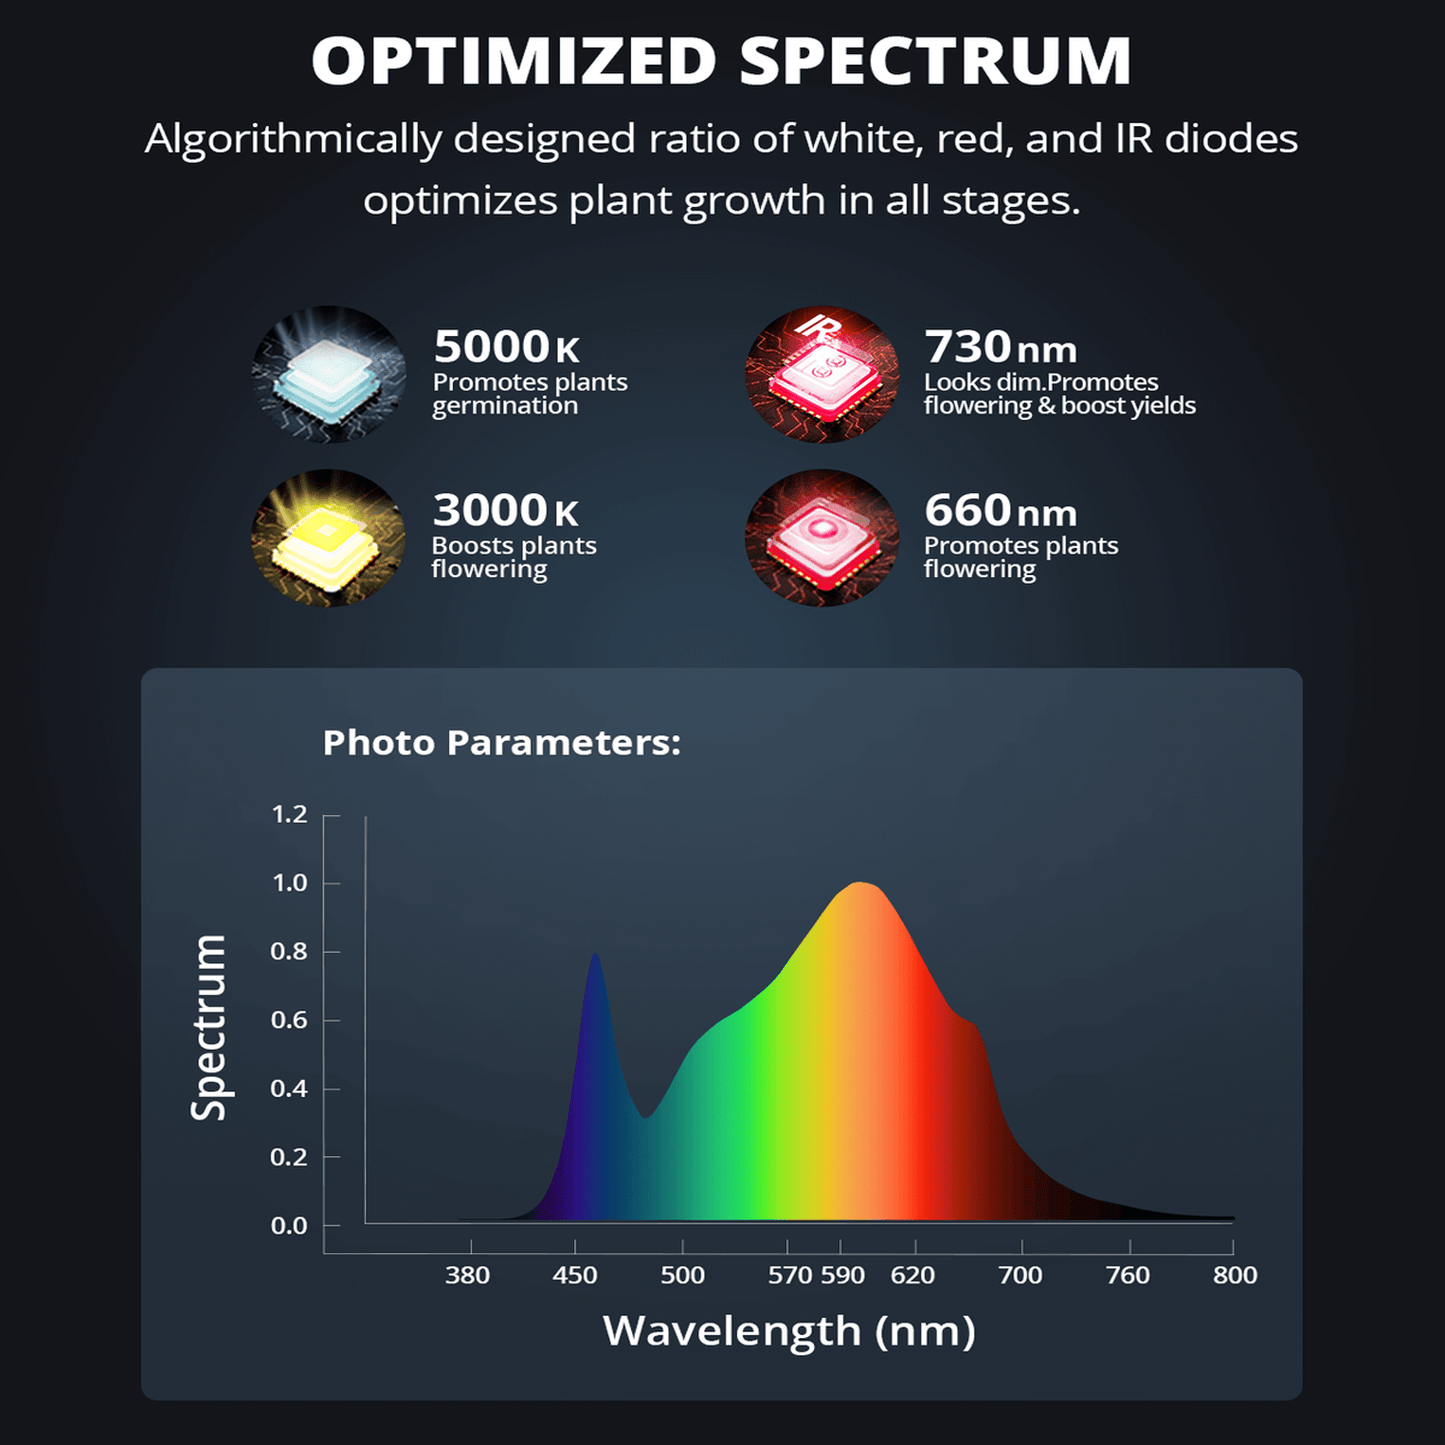 ViparSpectra V1000 100W Infrared Full Spectrum LED Grow Light | V1000 | Grow Tents Depot | Grow Lights |